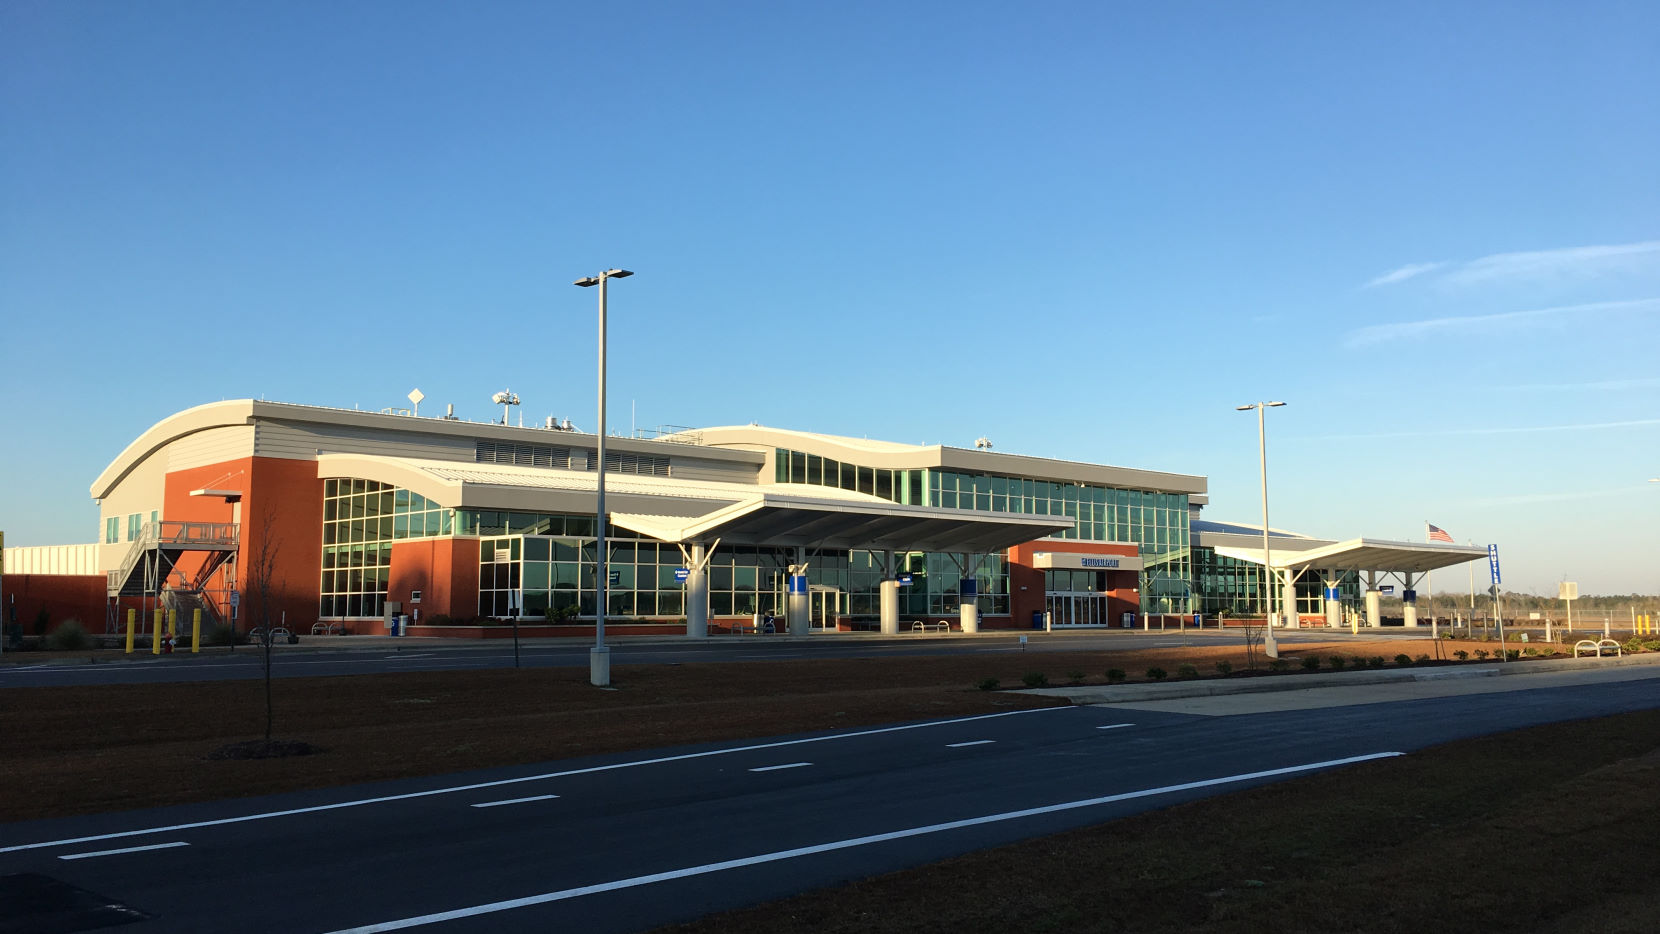 Terminal building of OAJ.